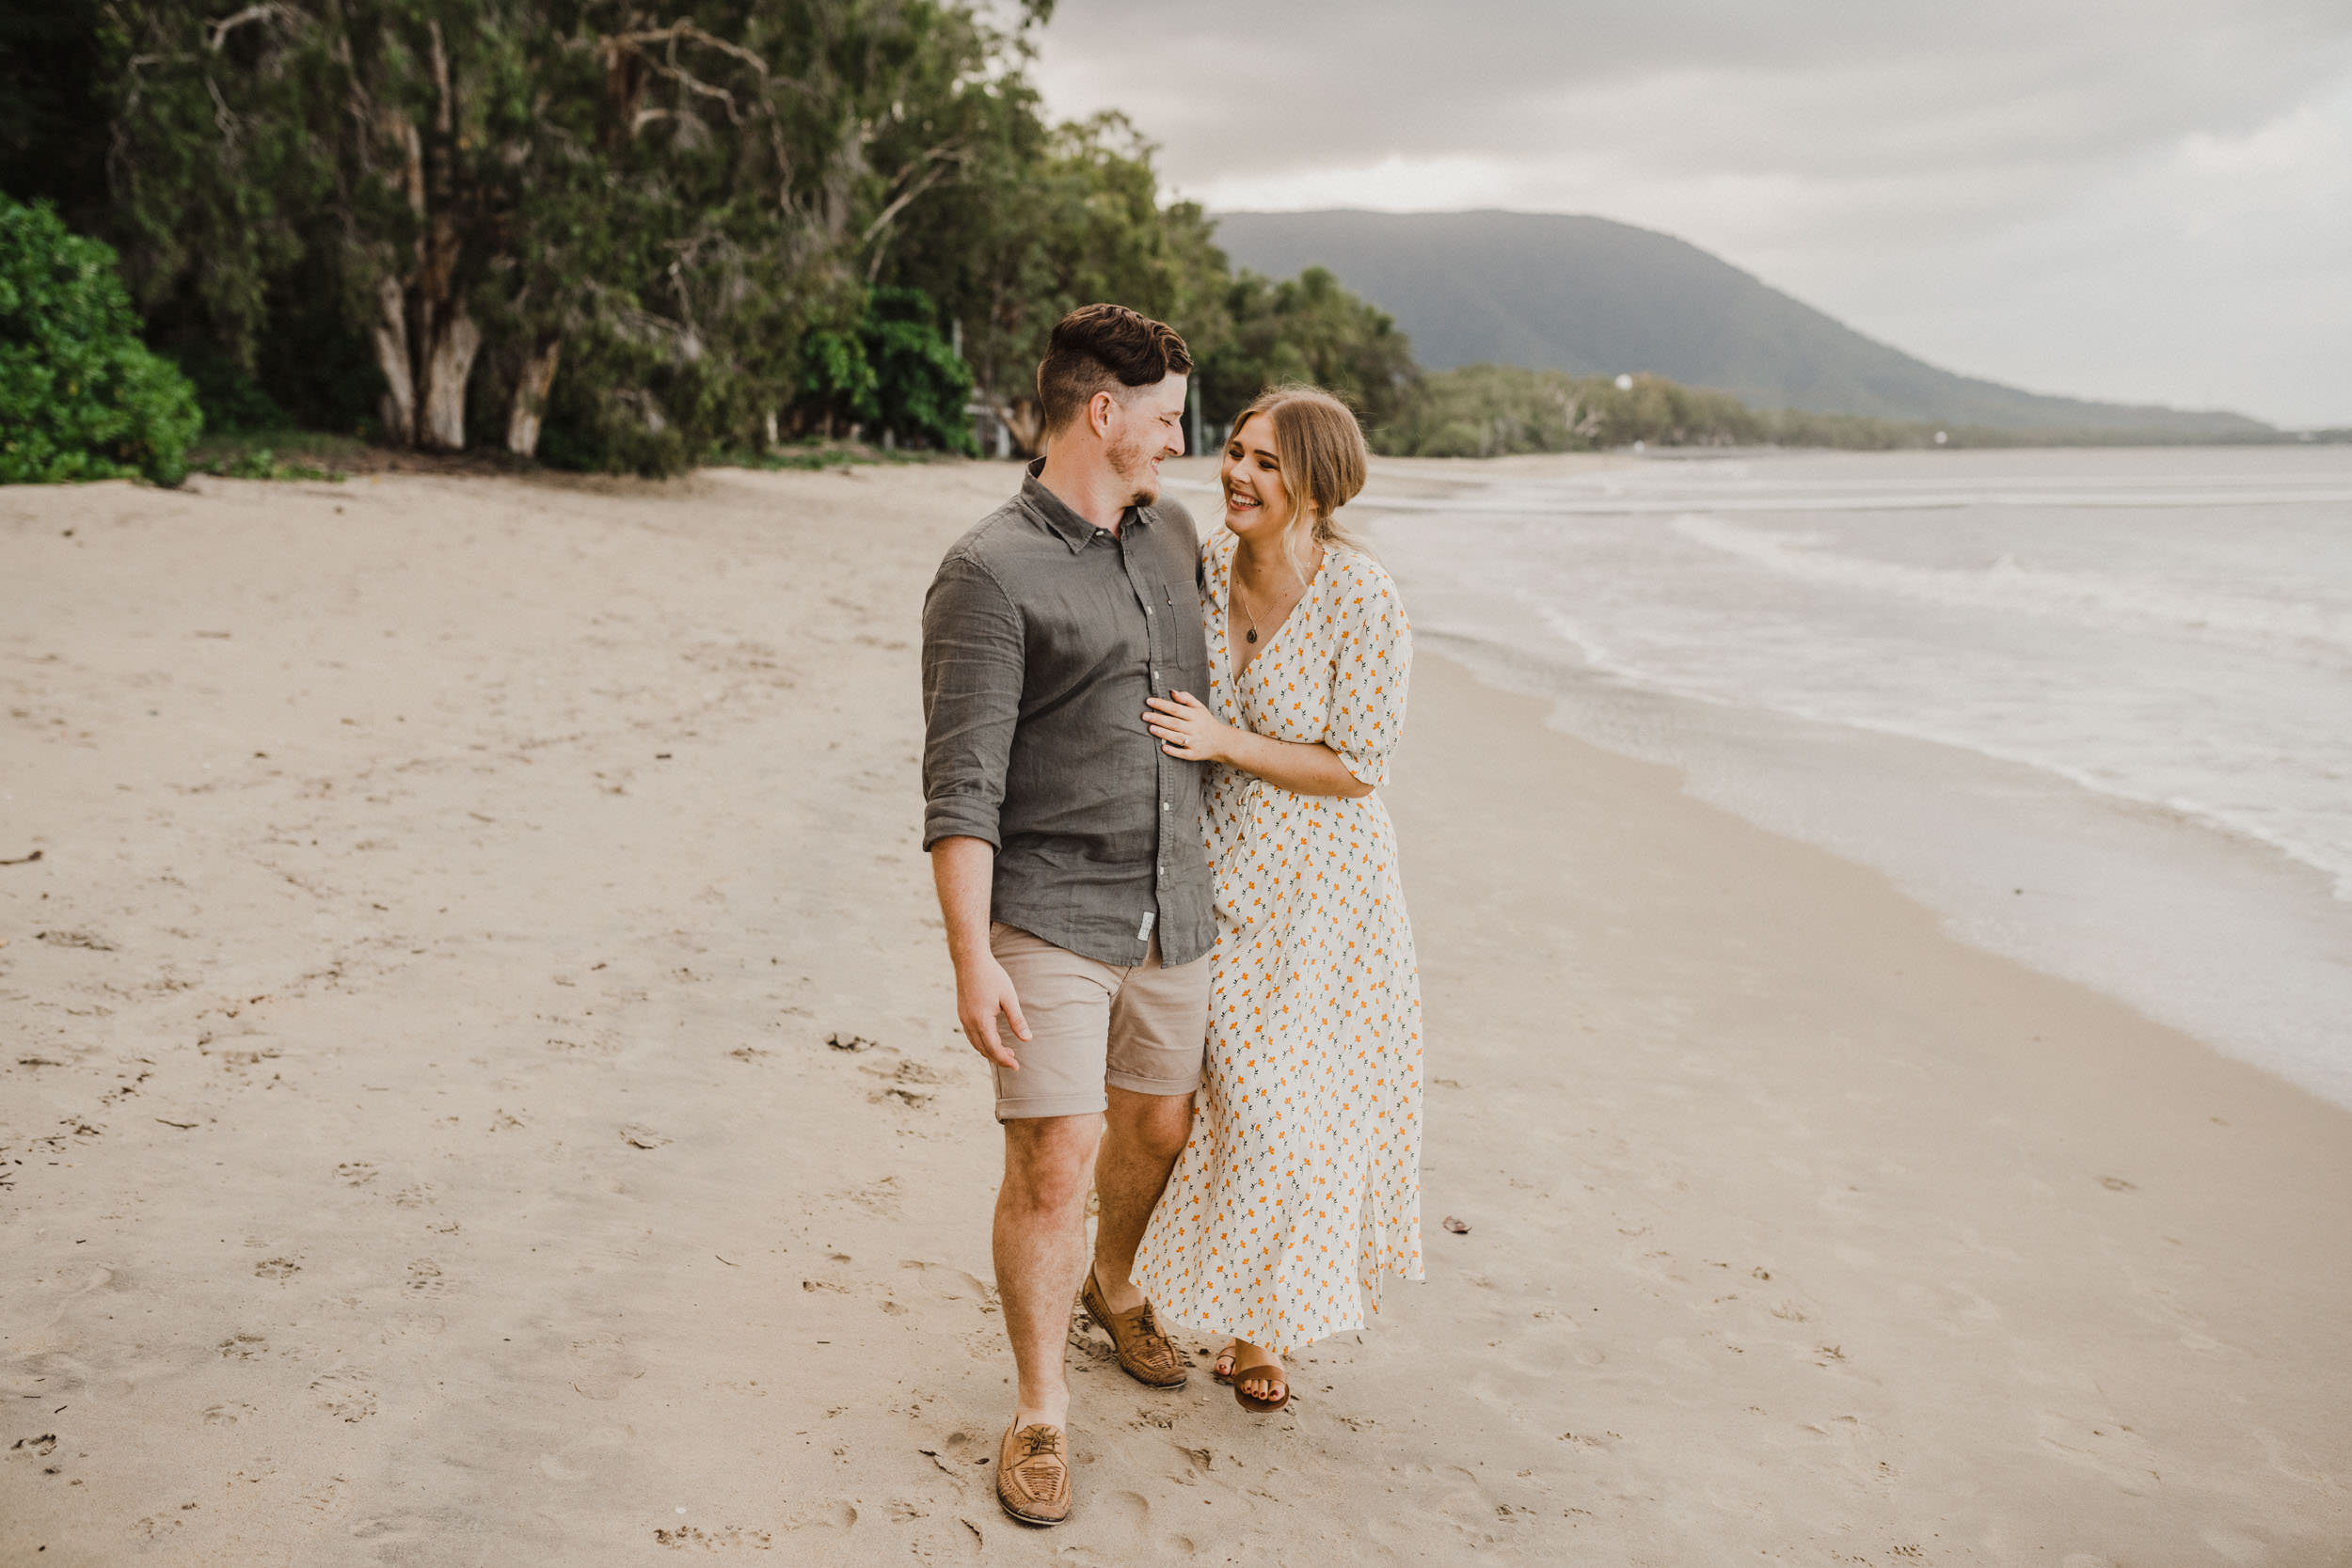 The Raw Photographer - Cairns Wedding Photographer - Beach Engagement Shoot - Candid Picnic-18.jpg